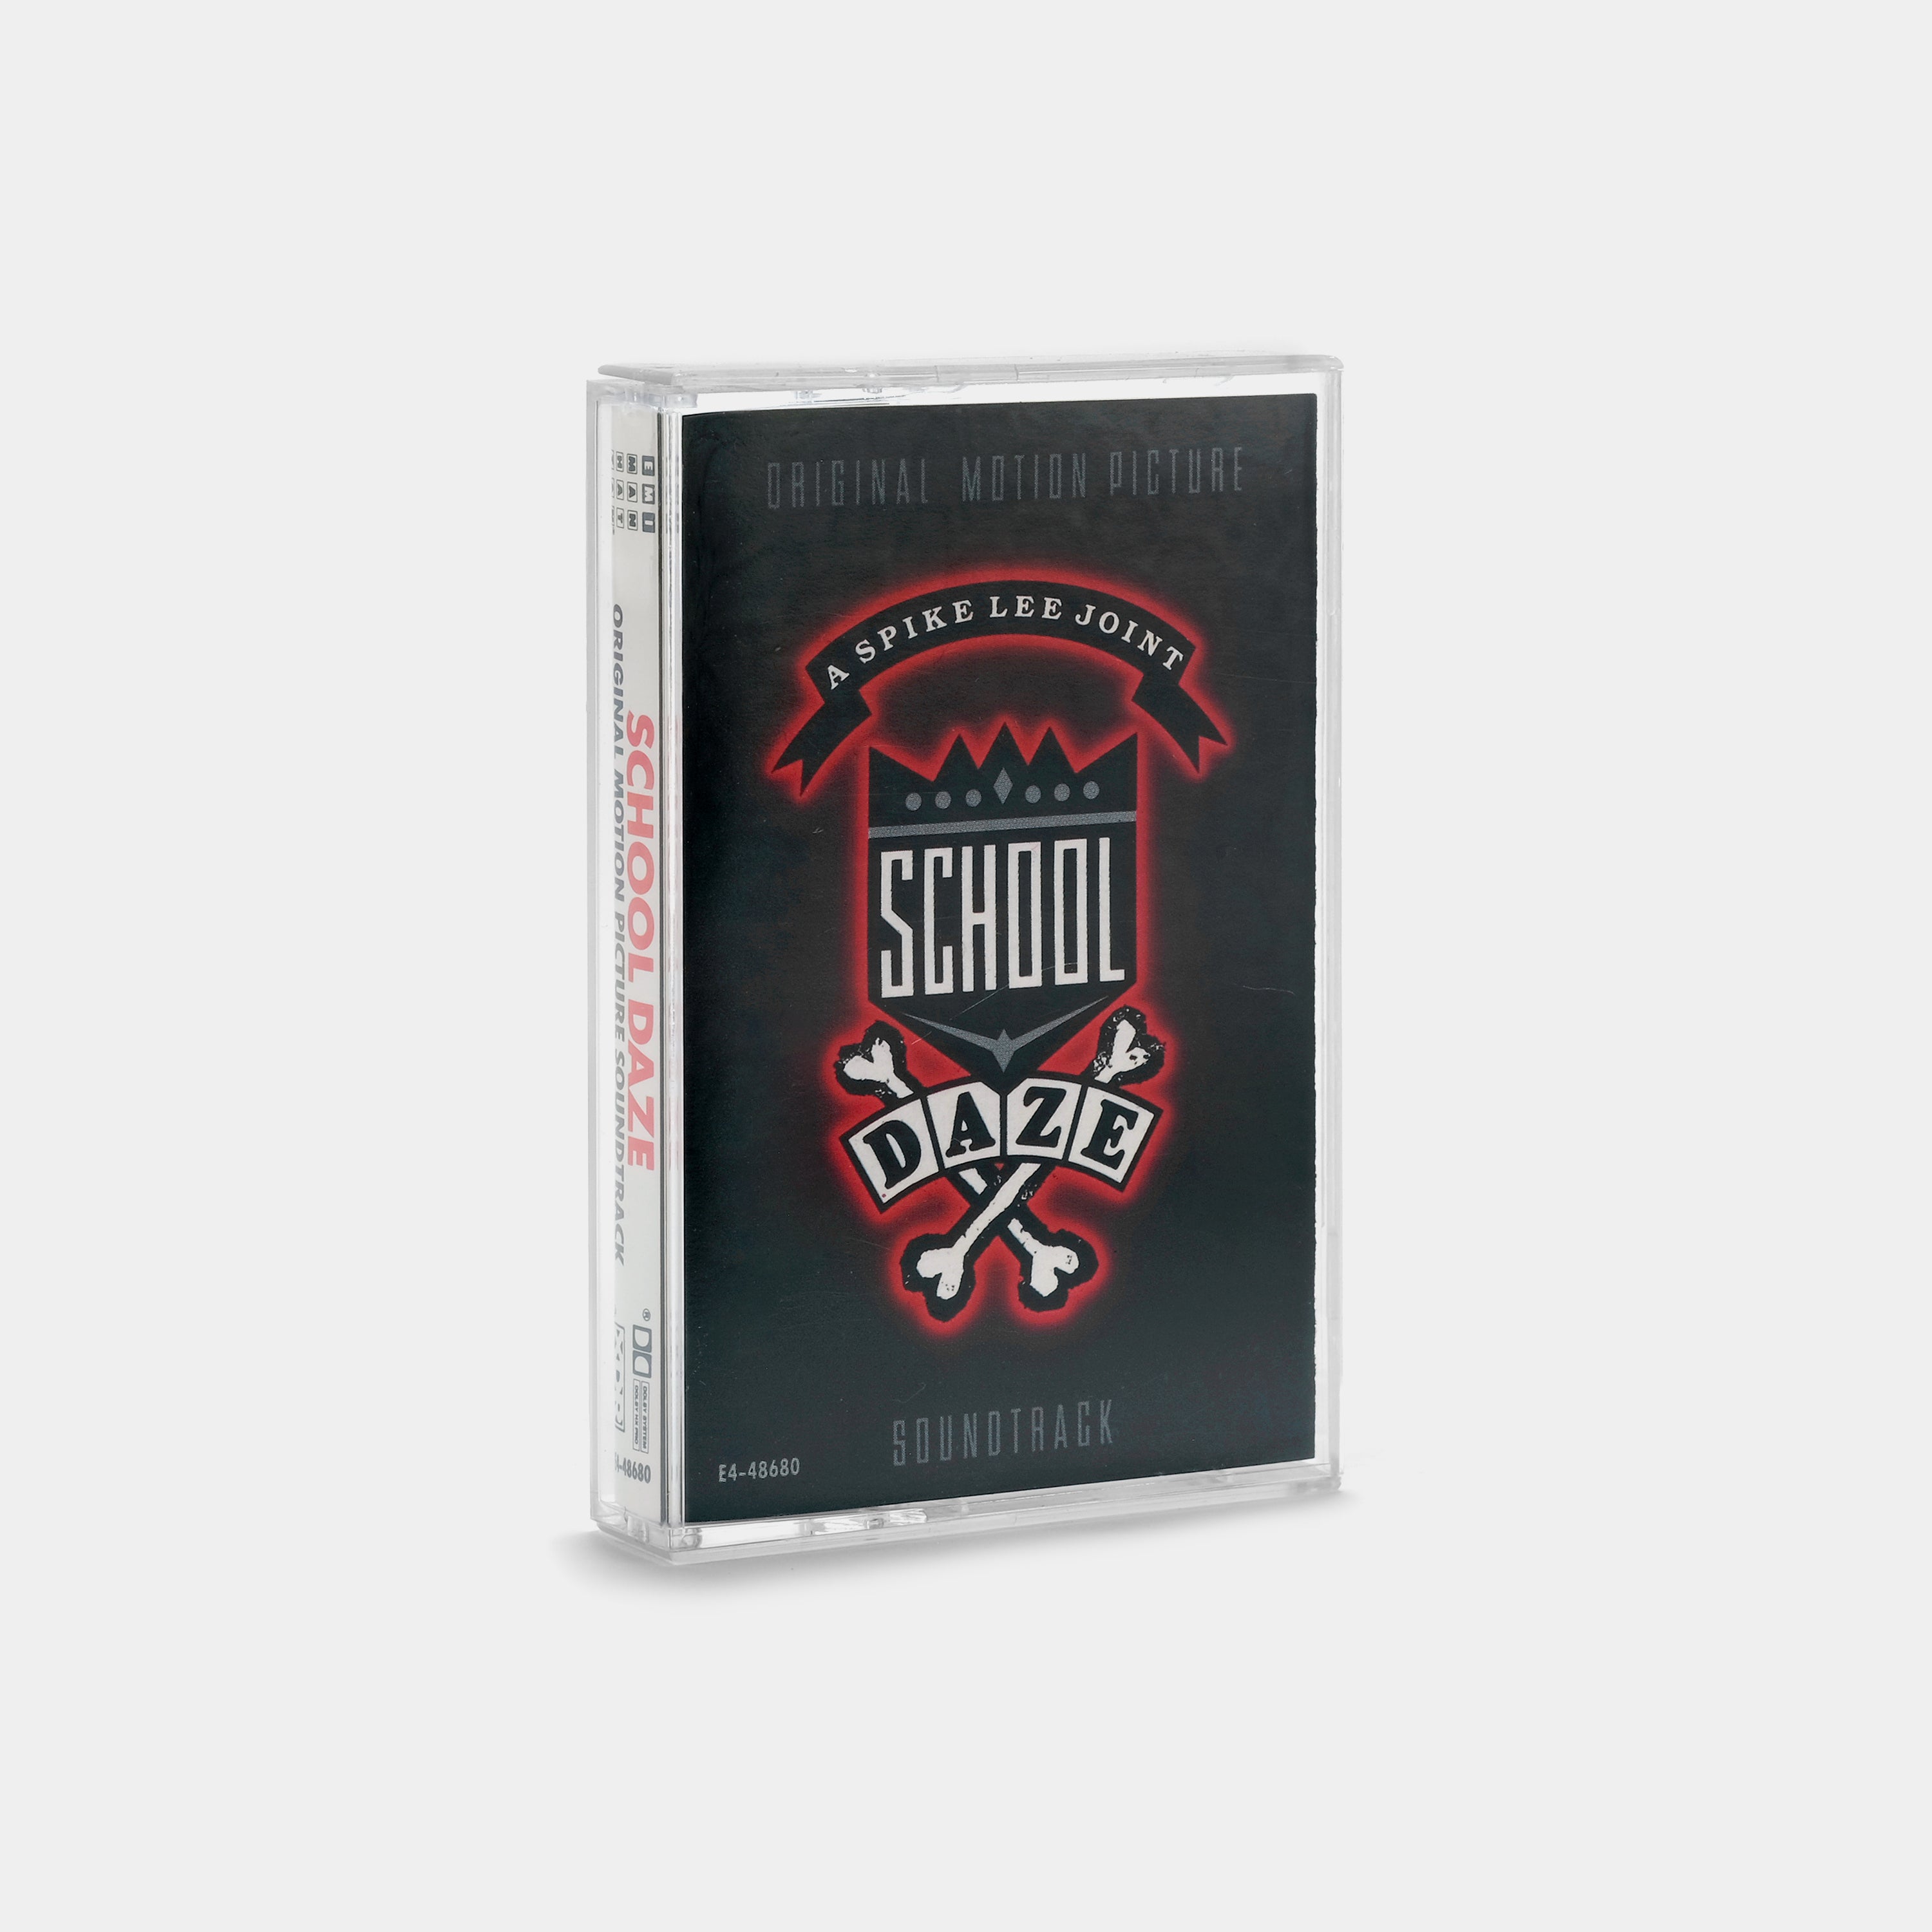 School Daze (Original Motion Picture Soundtrack) Cassette Tape